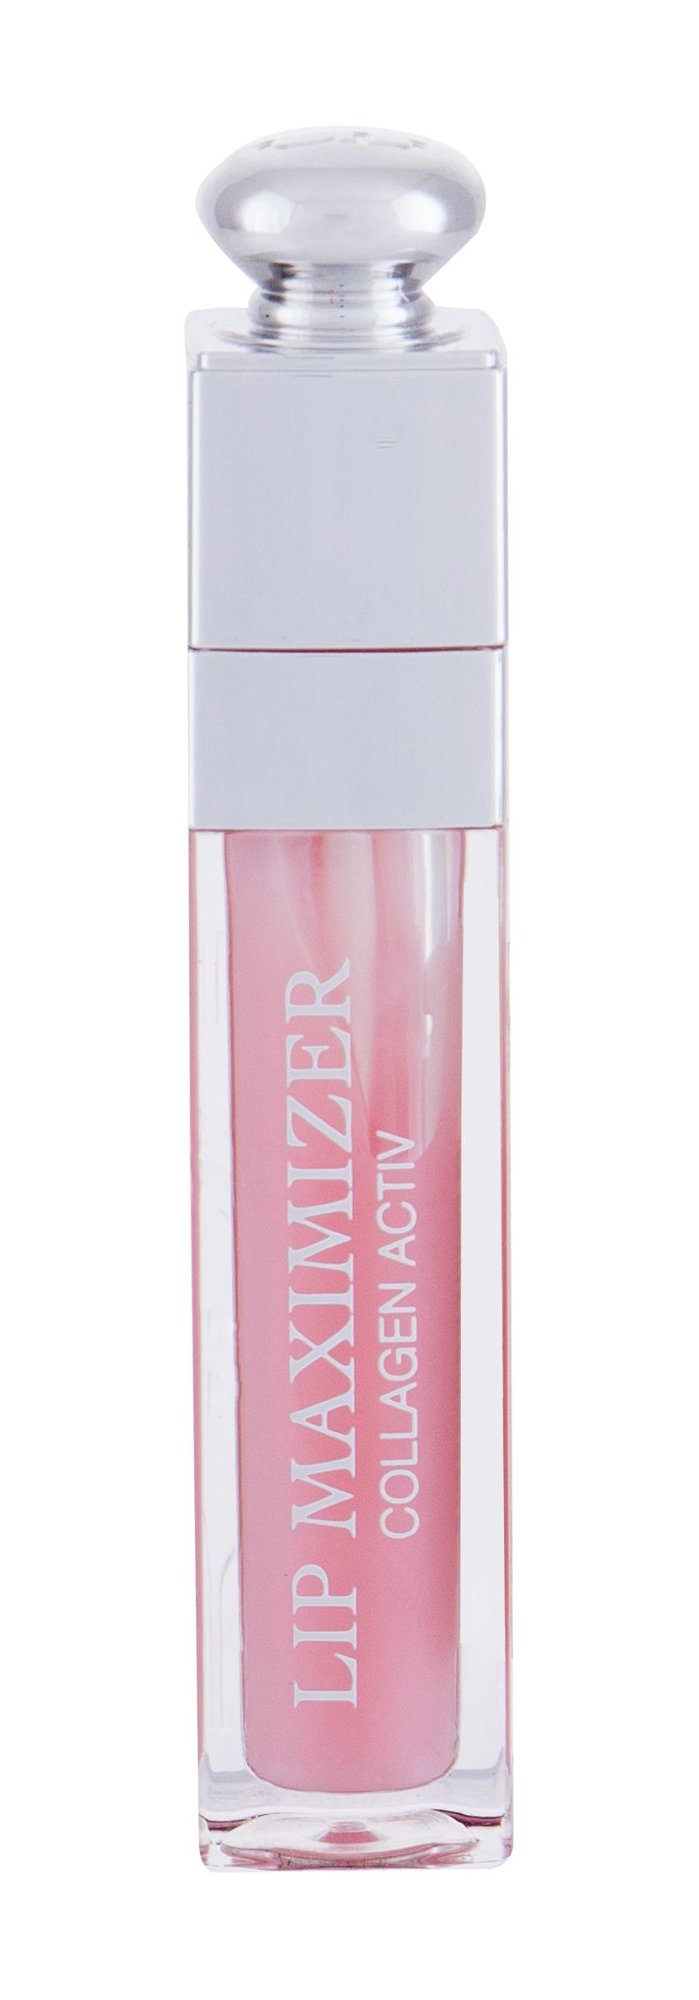 Christian Dior Addict Lip Maximizer 6ml lūpų blizgesys Testeris